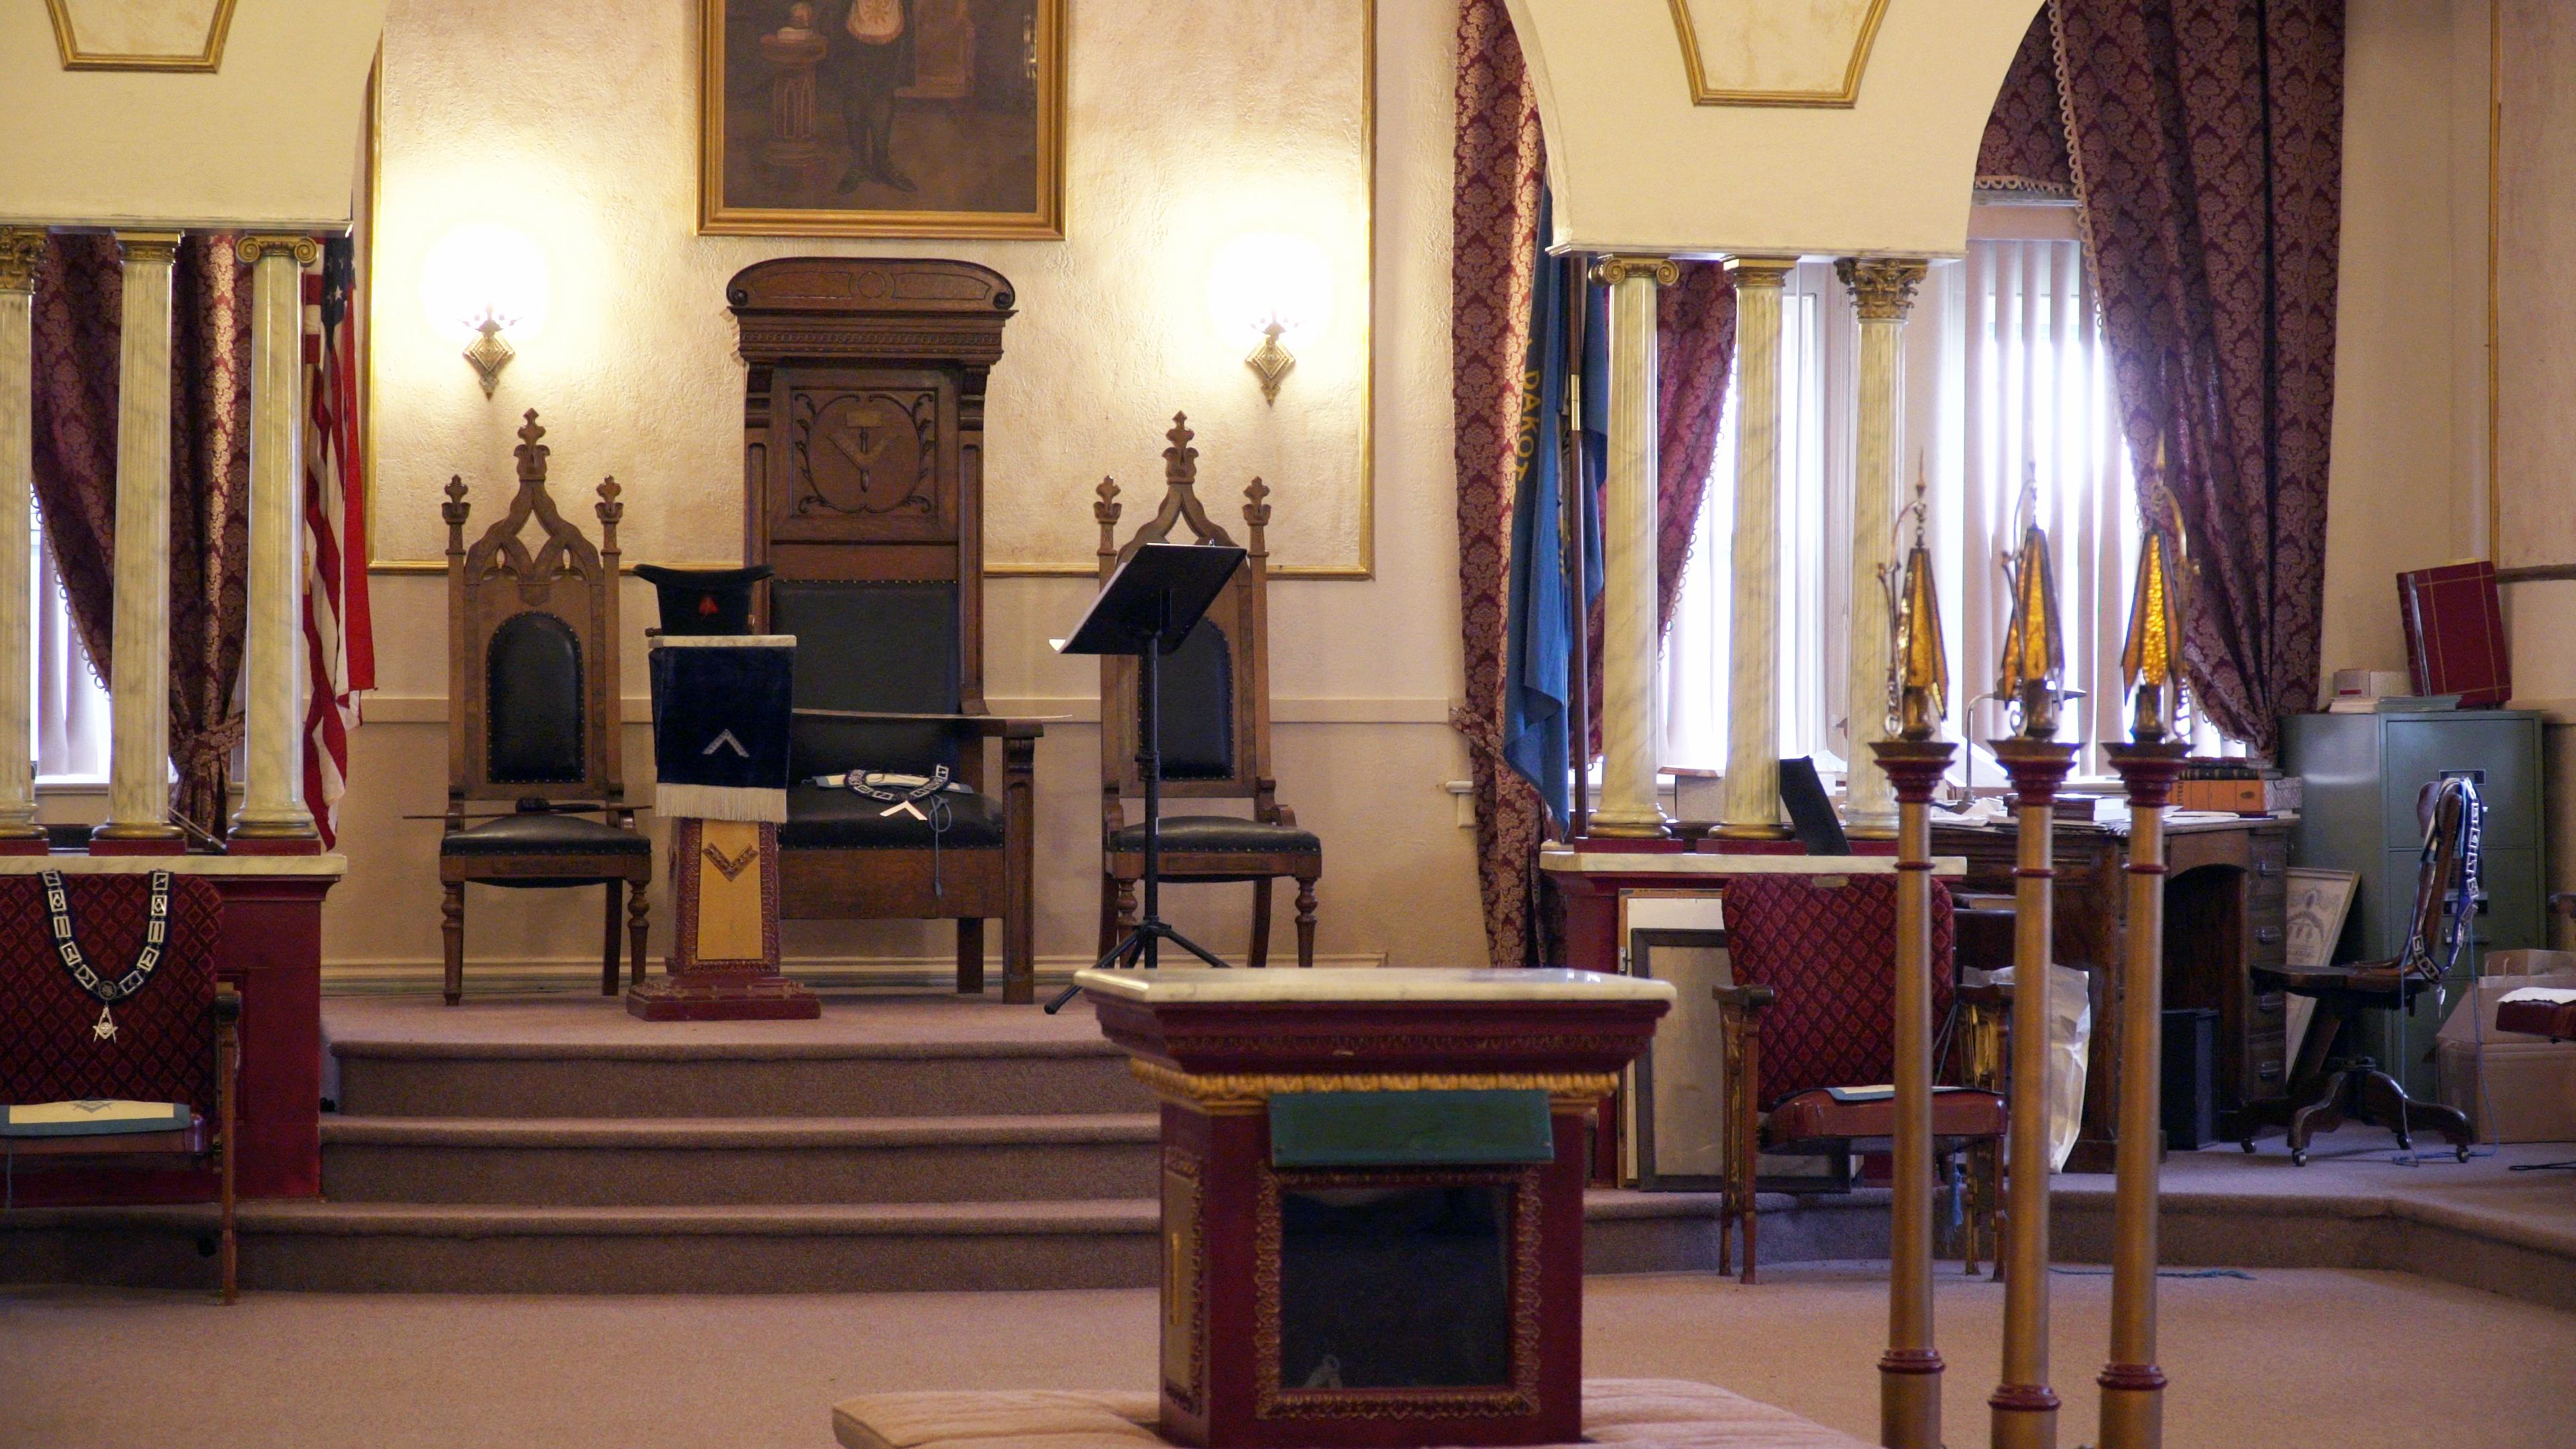 Interior of the Yankton Scottish Rite Masonic Temple